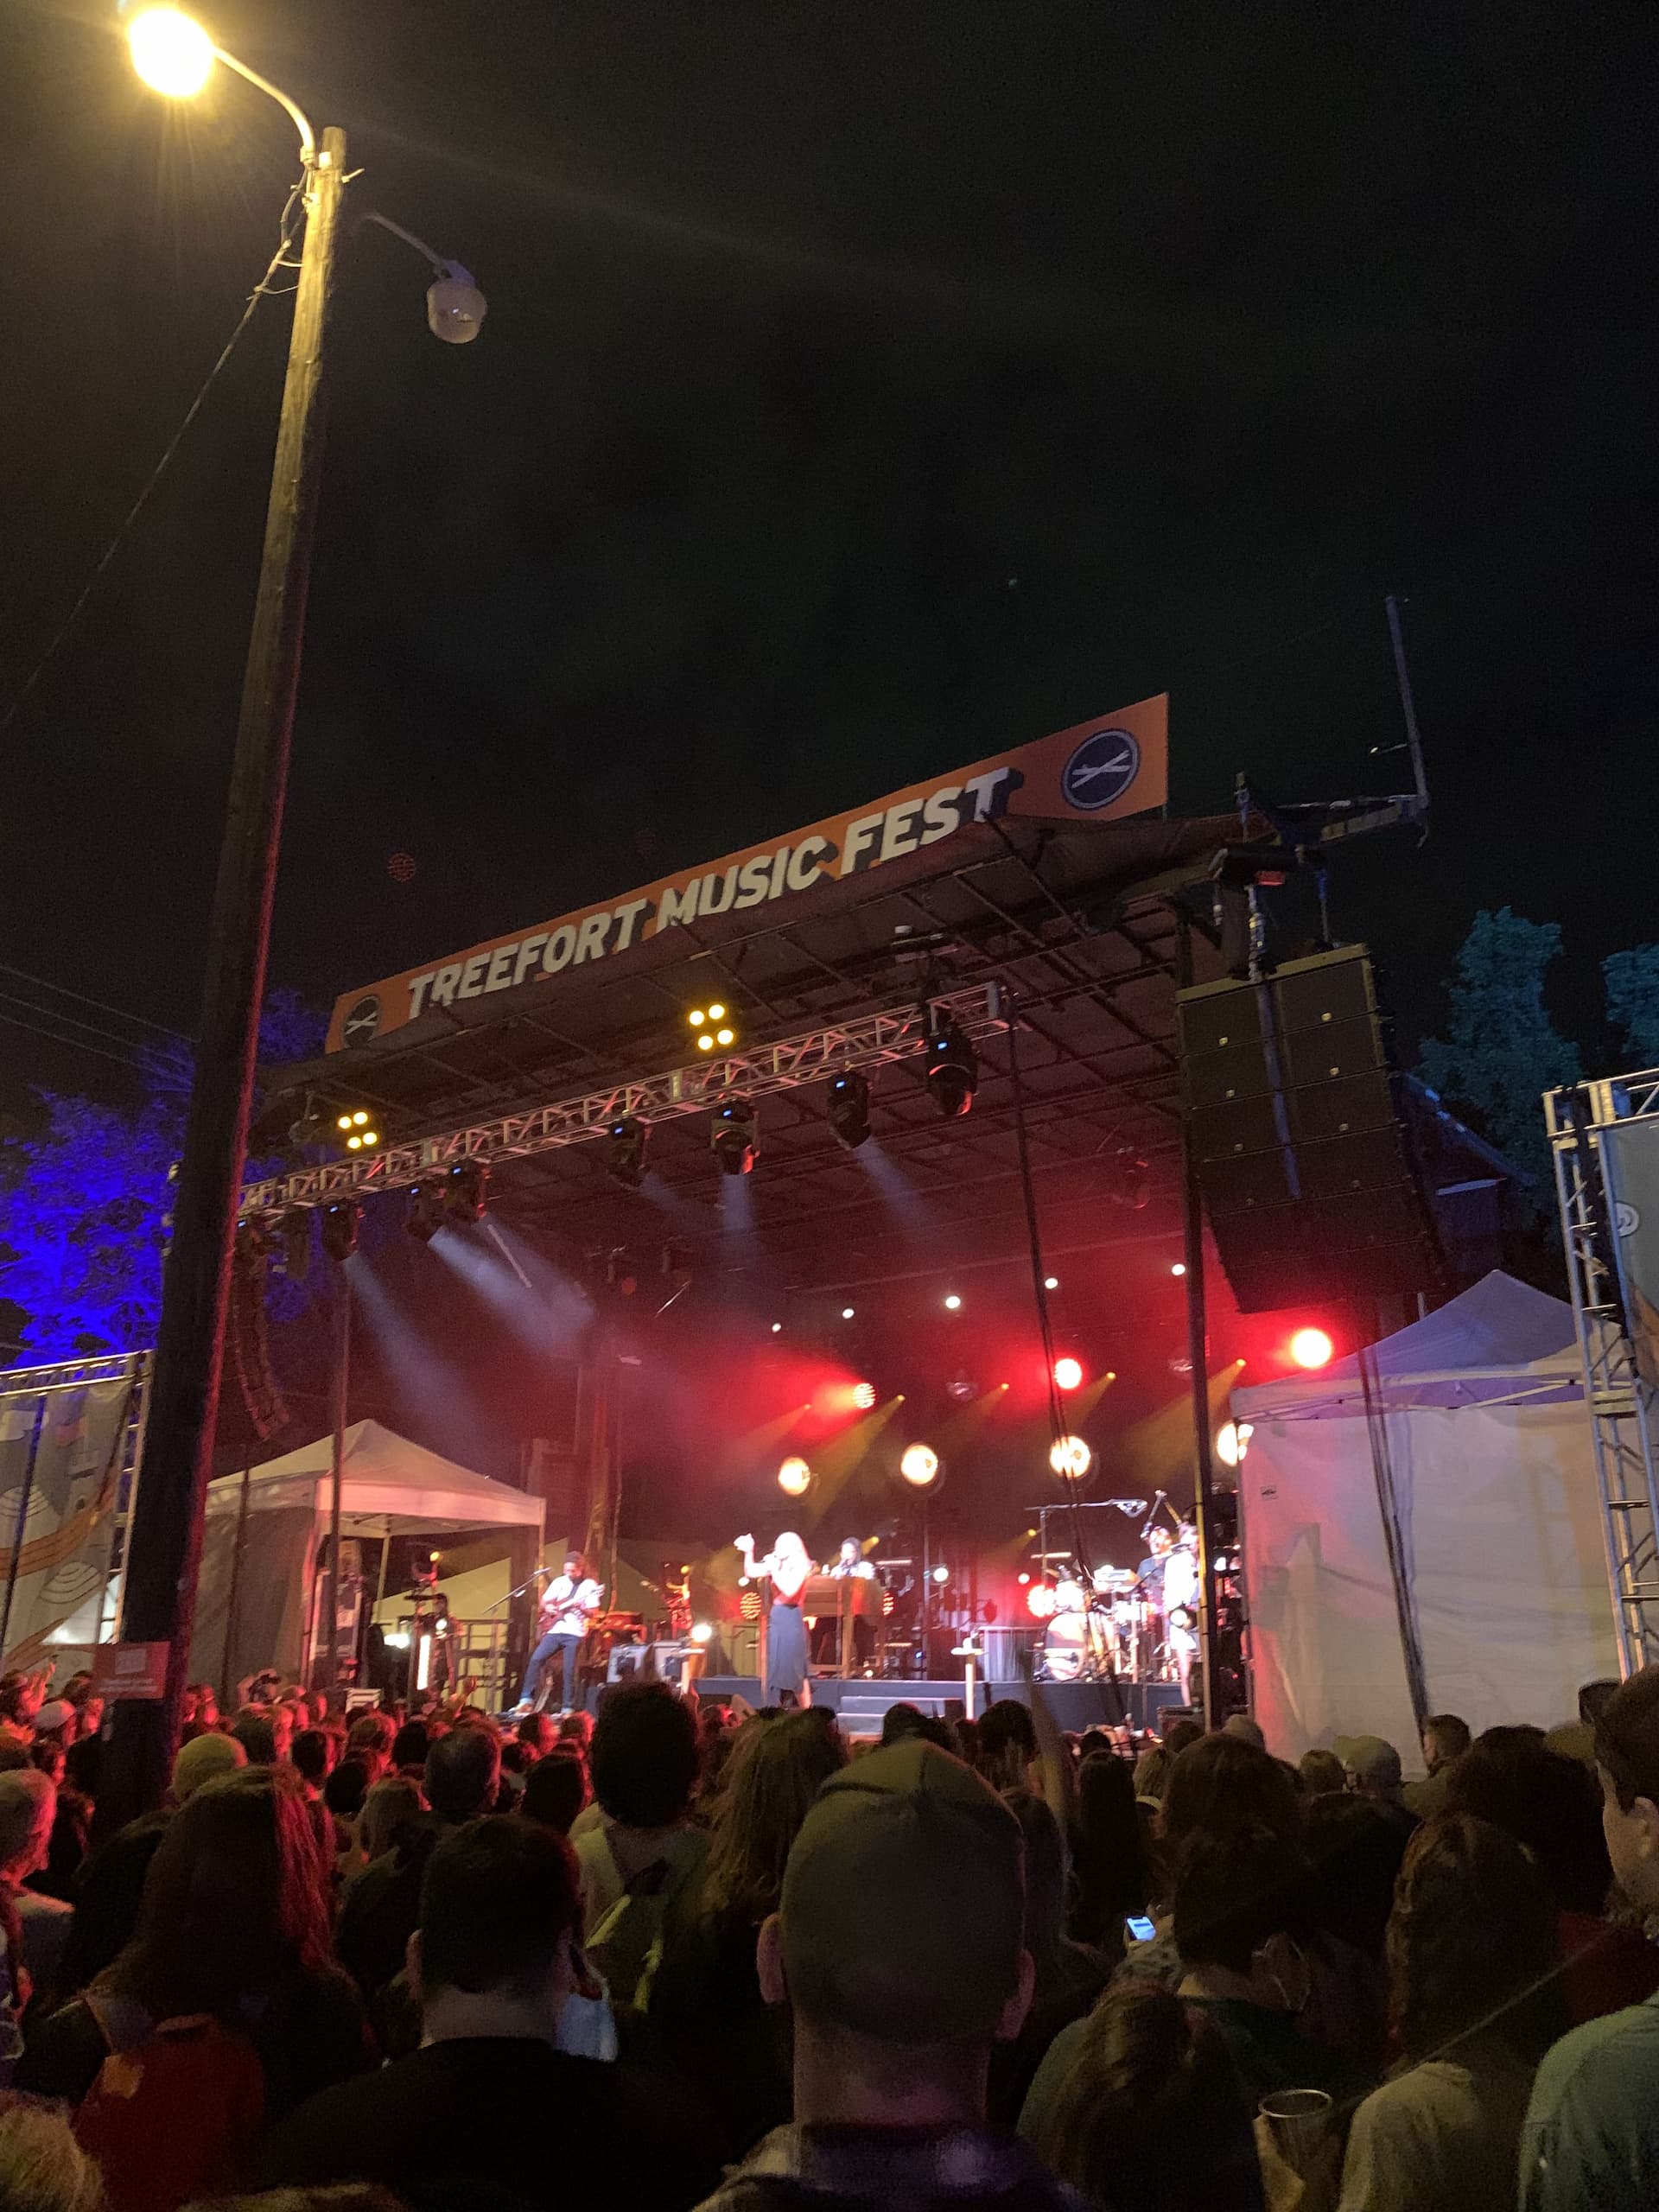 Music Event at Treefort Music Festival in Boise, ID | Totally Boise